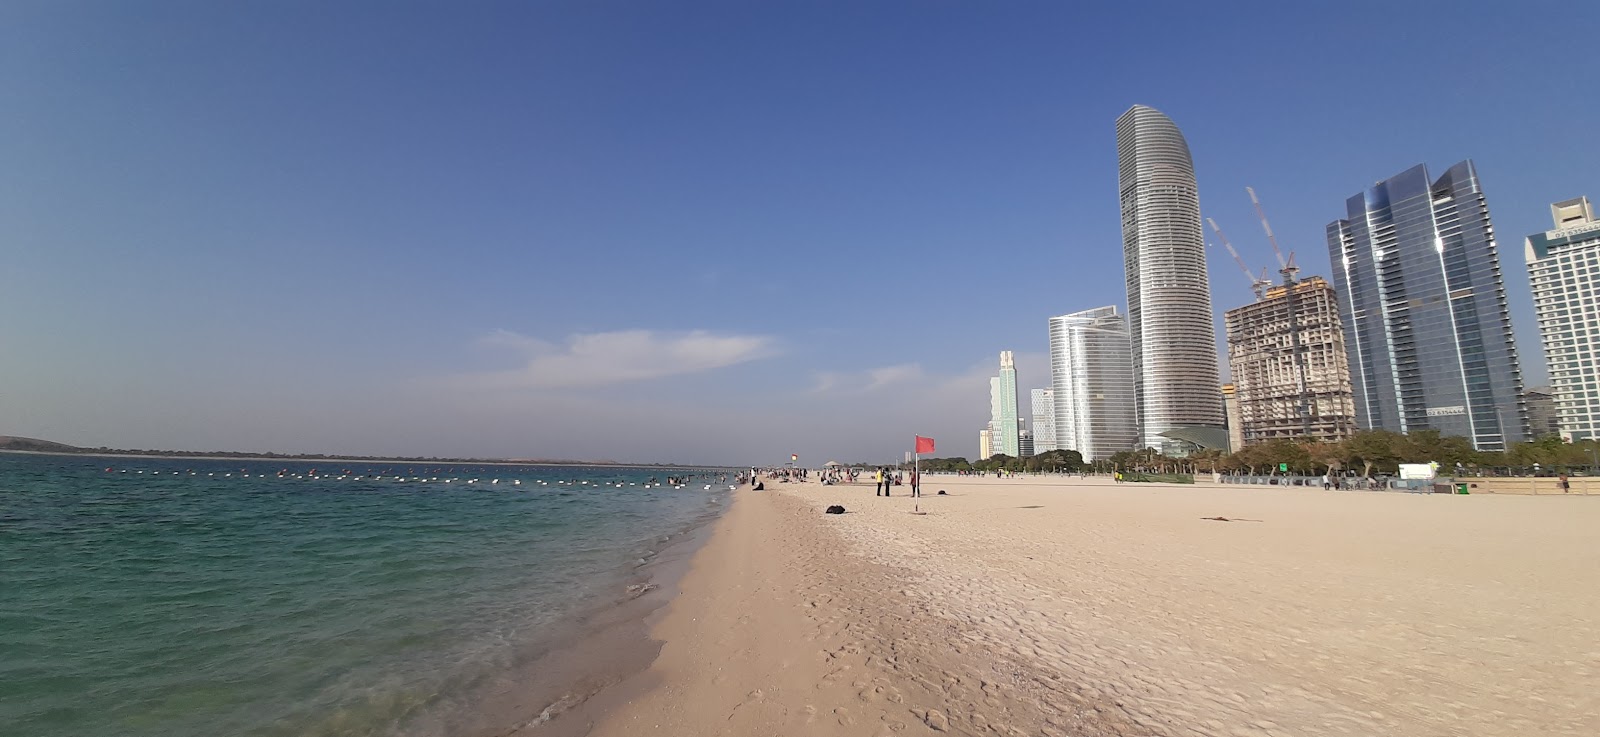 Photo of Abu Dhabi beach with spacious shore